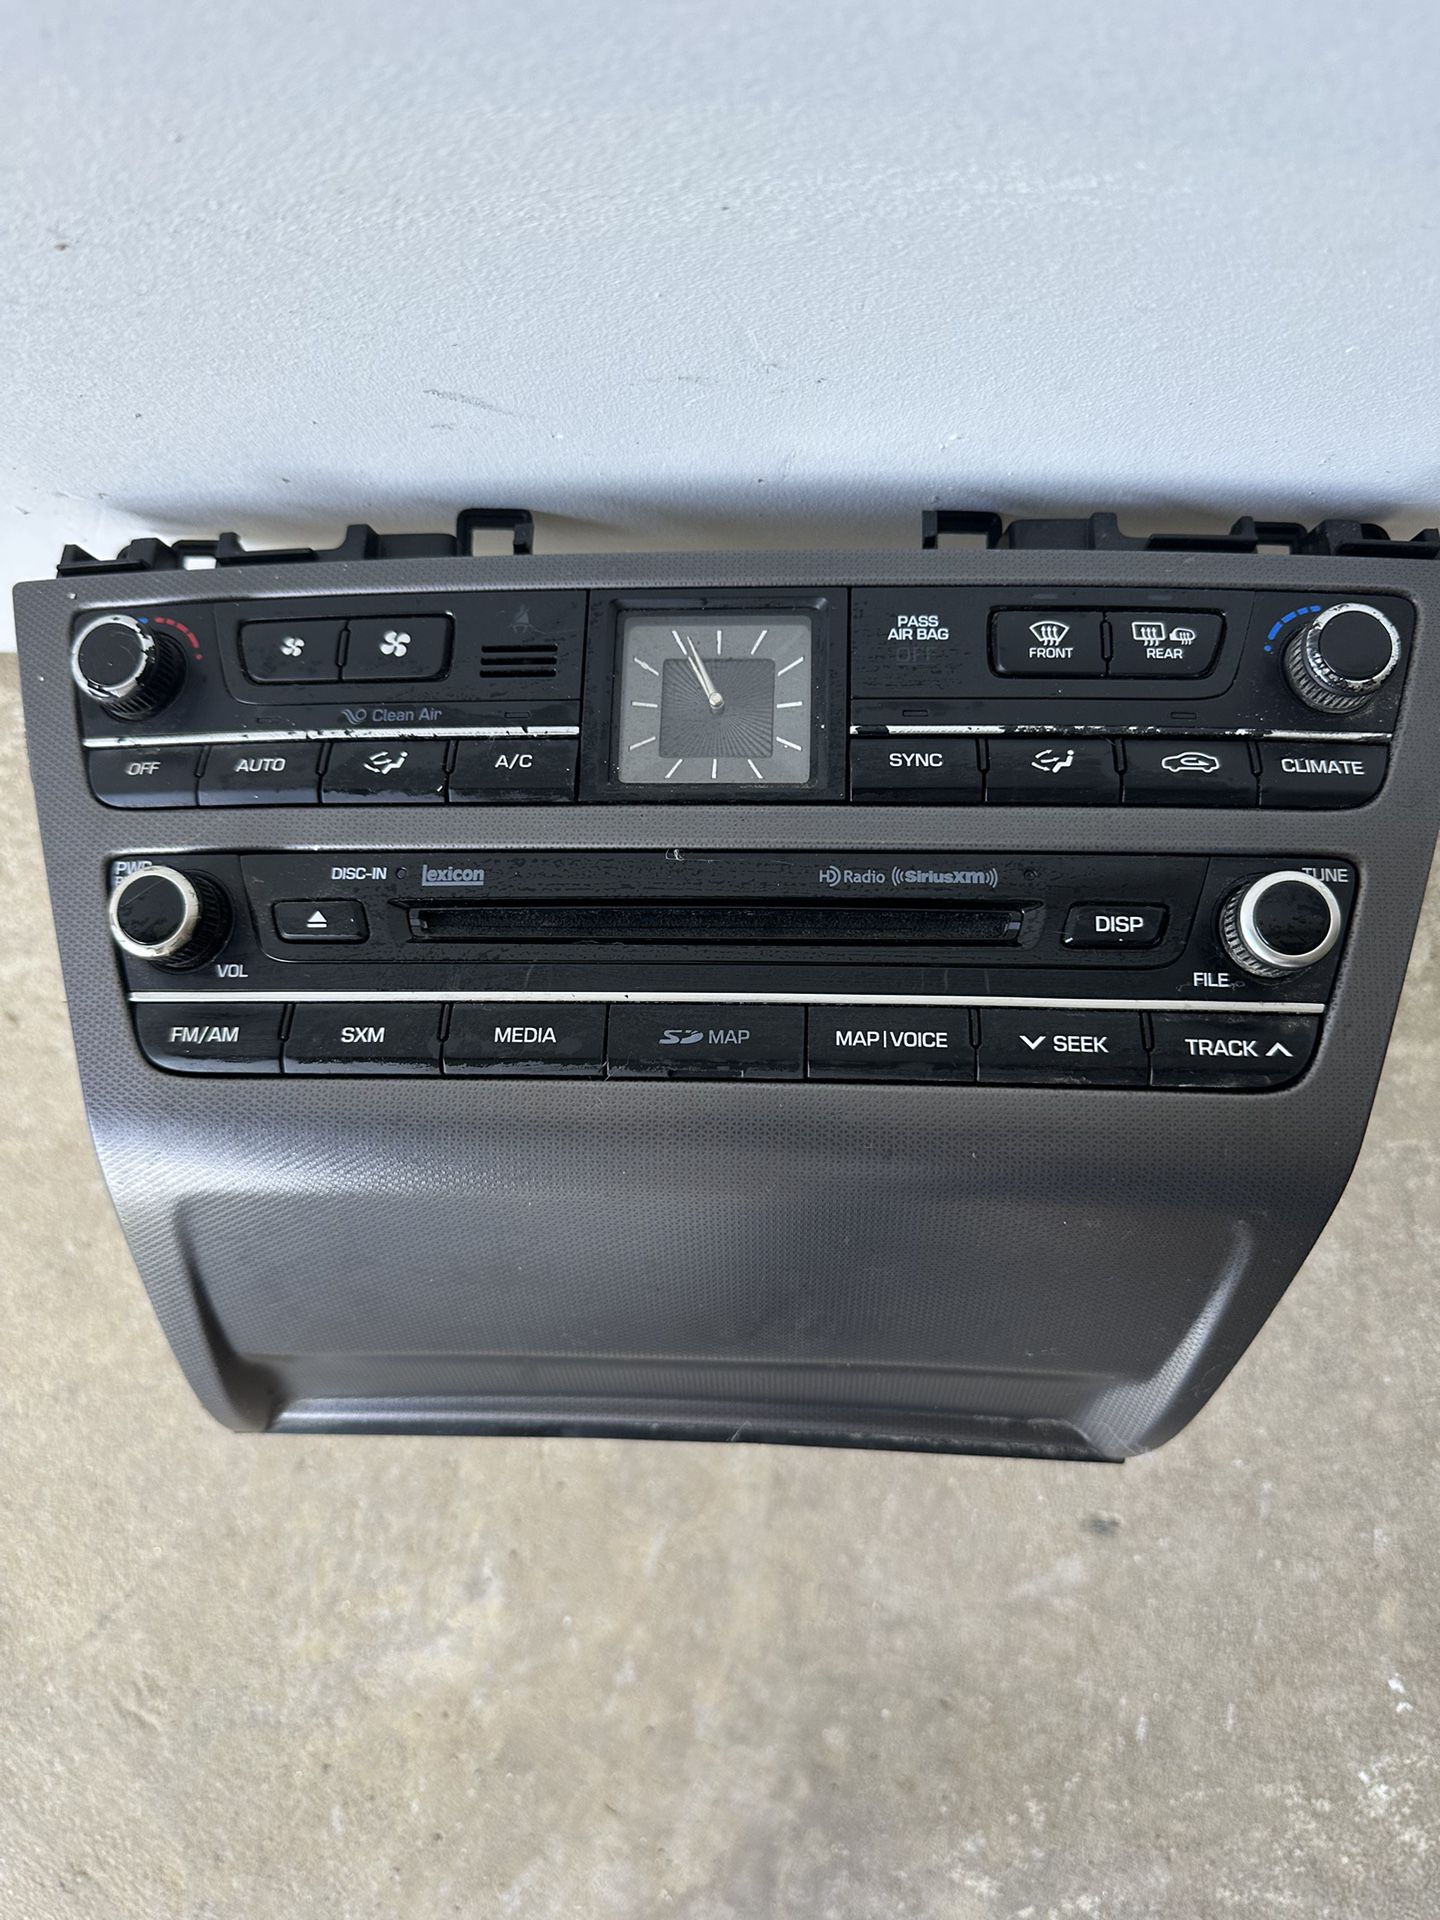 2015 - 2018 Hyundai Genesis OEM Navigation Lexicon HD Radio Receiver G80